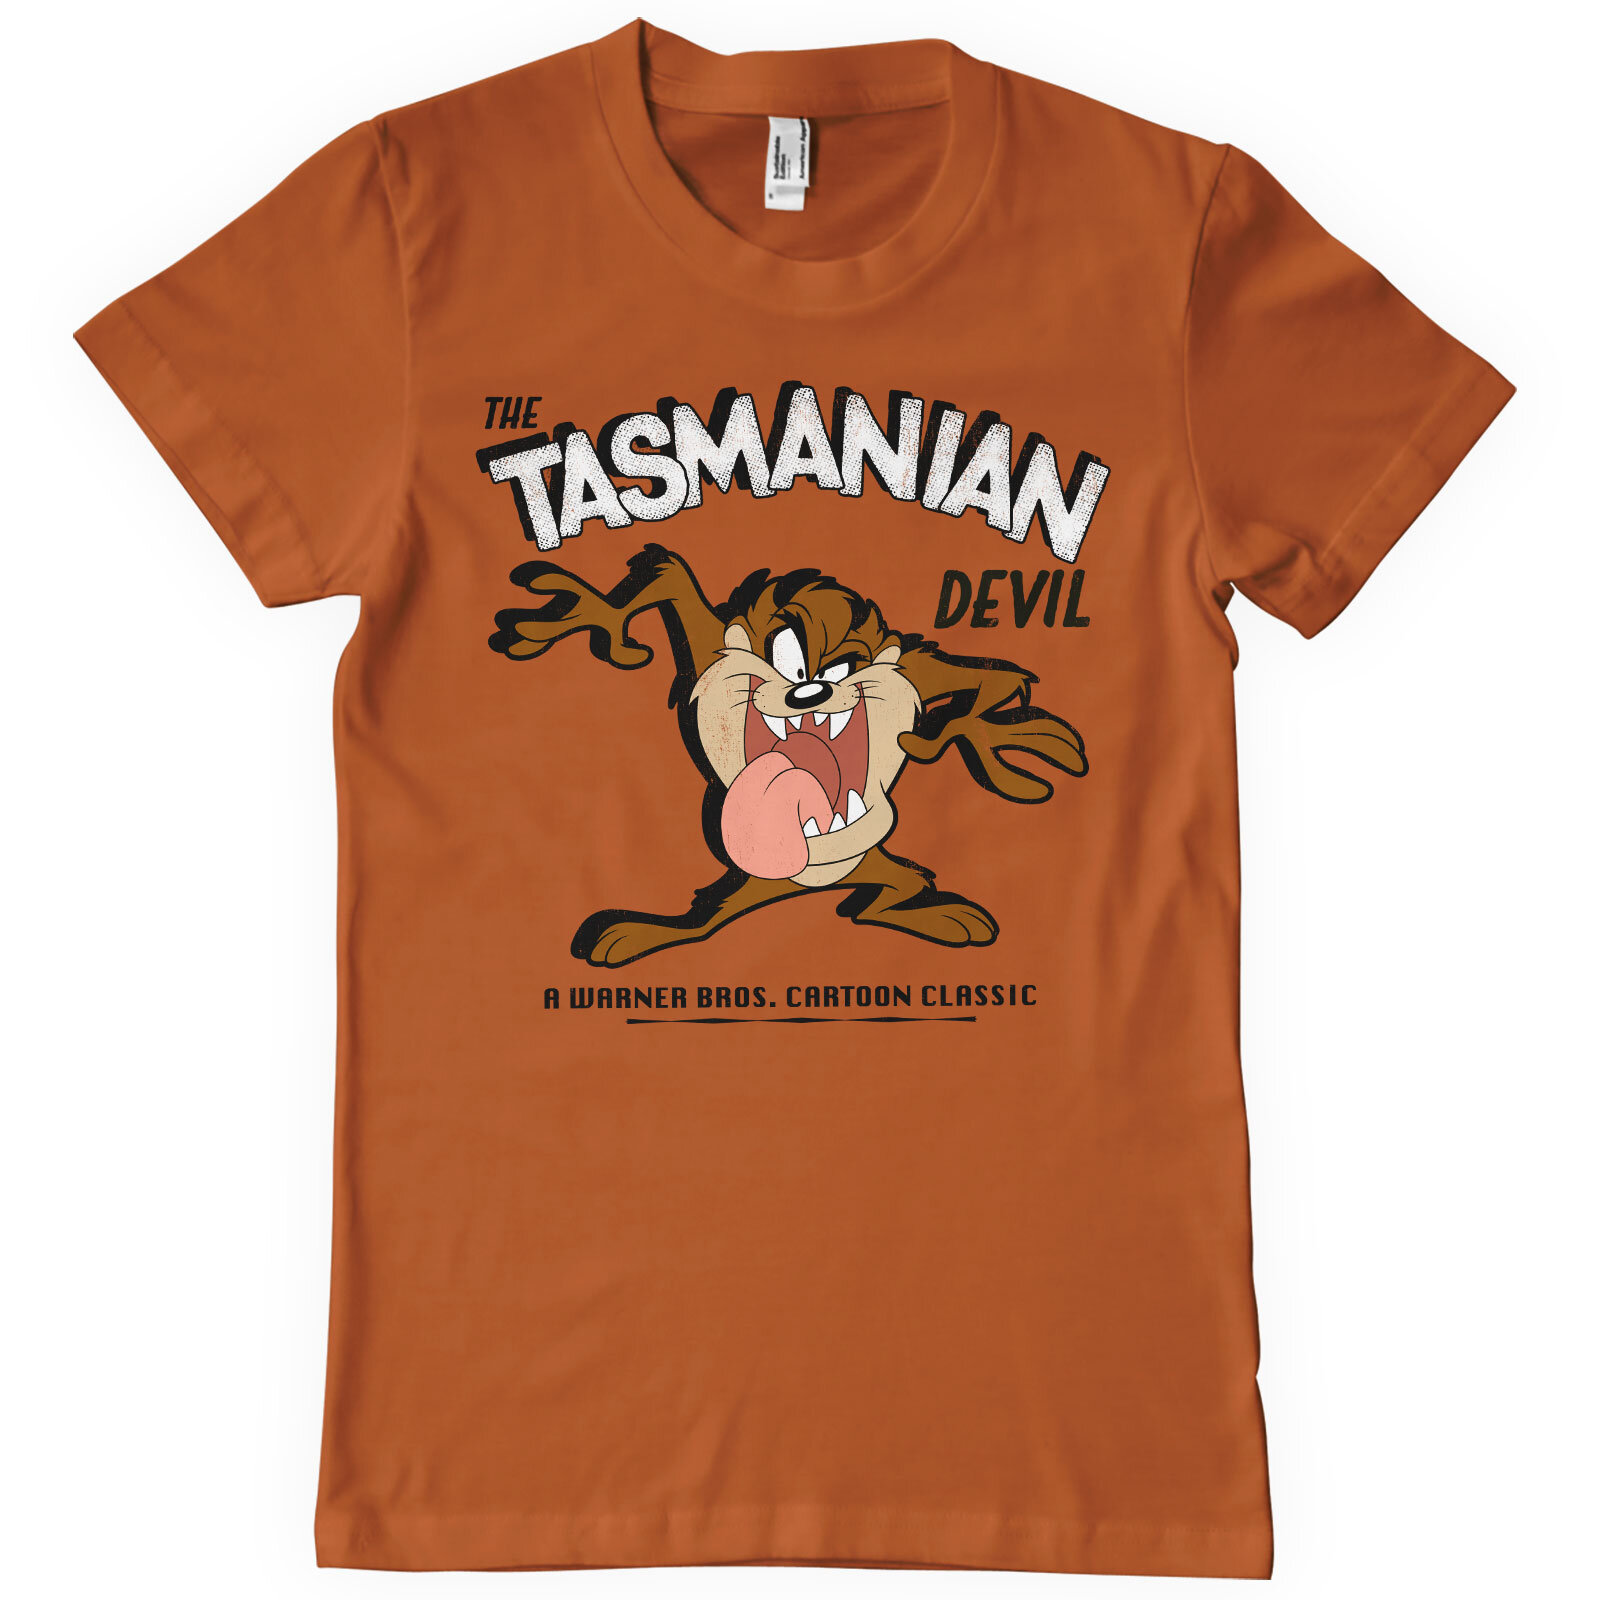 The Tasmanian Devil T-Shirt